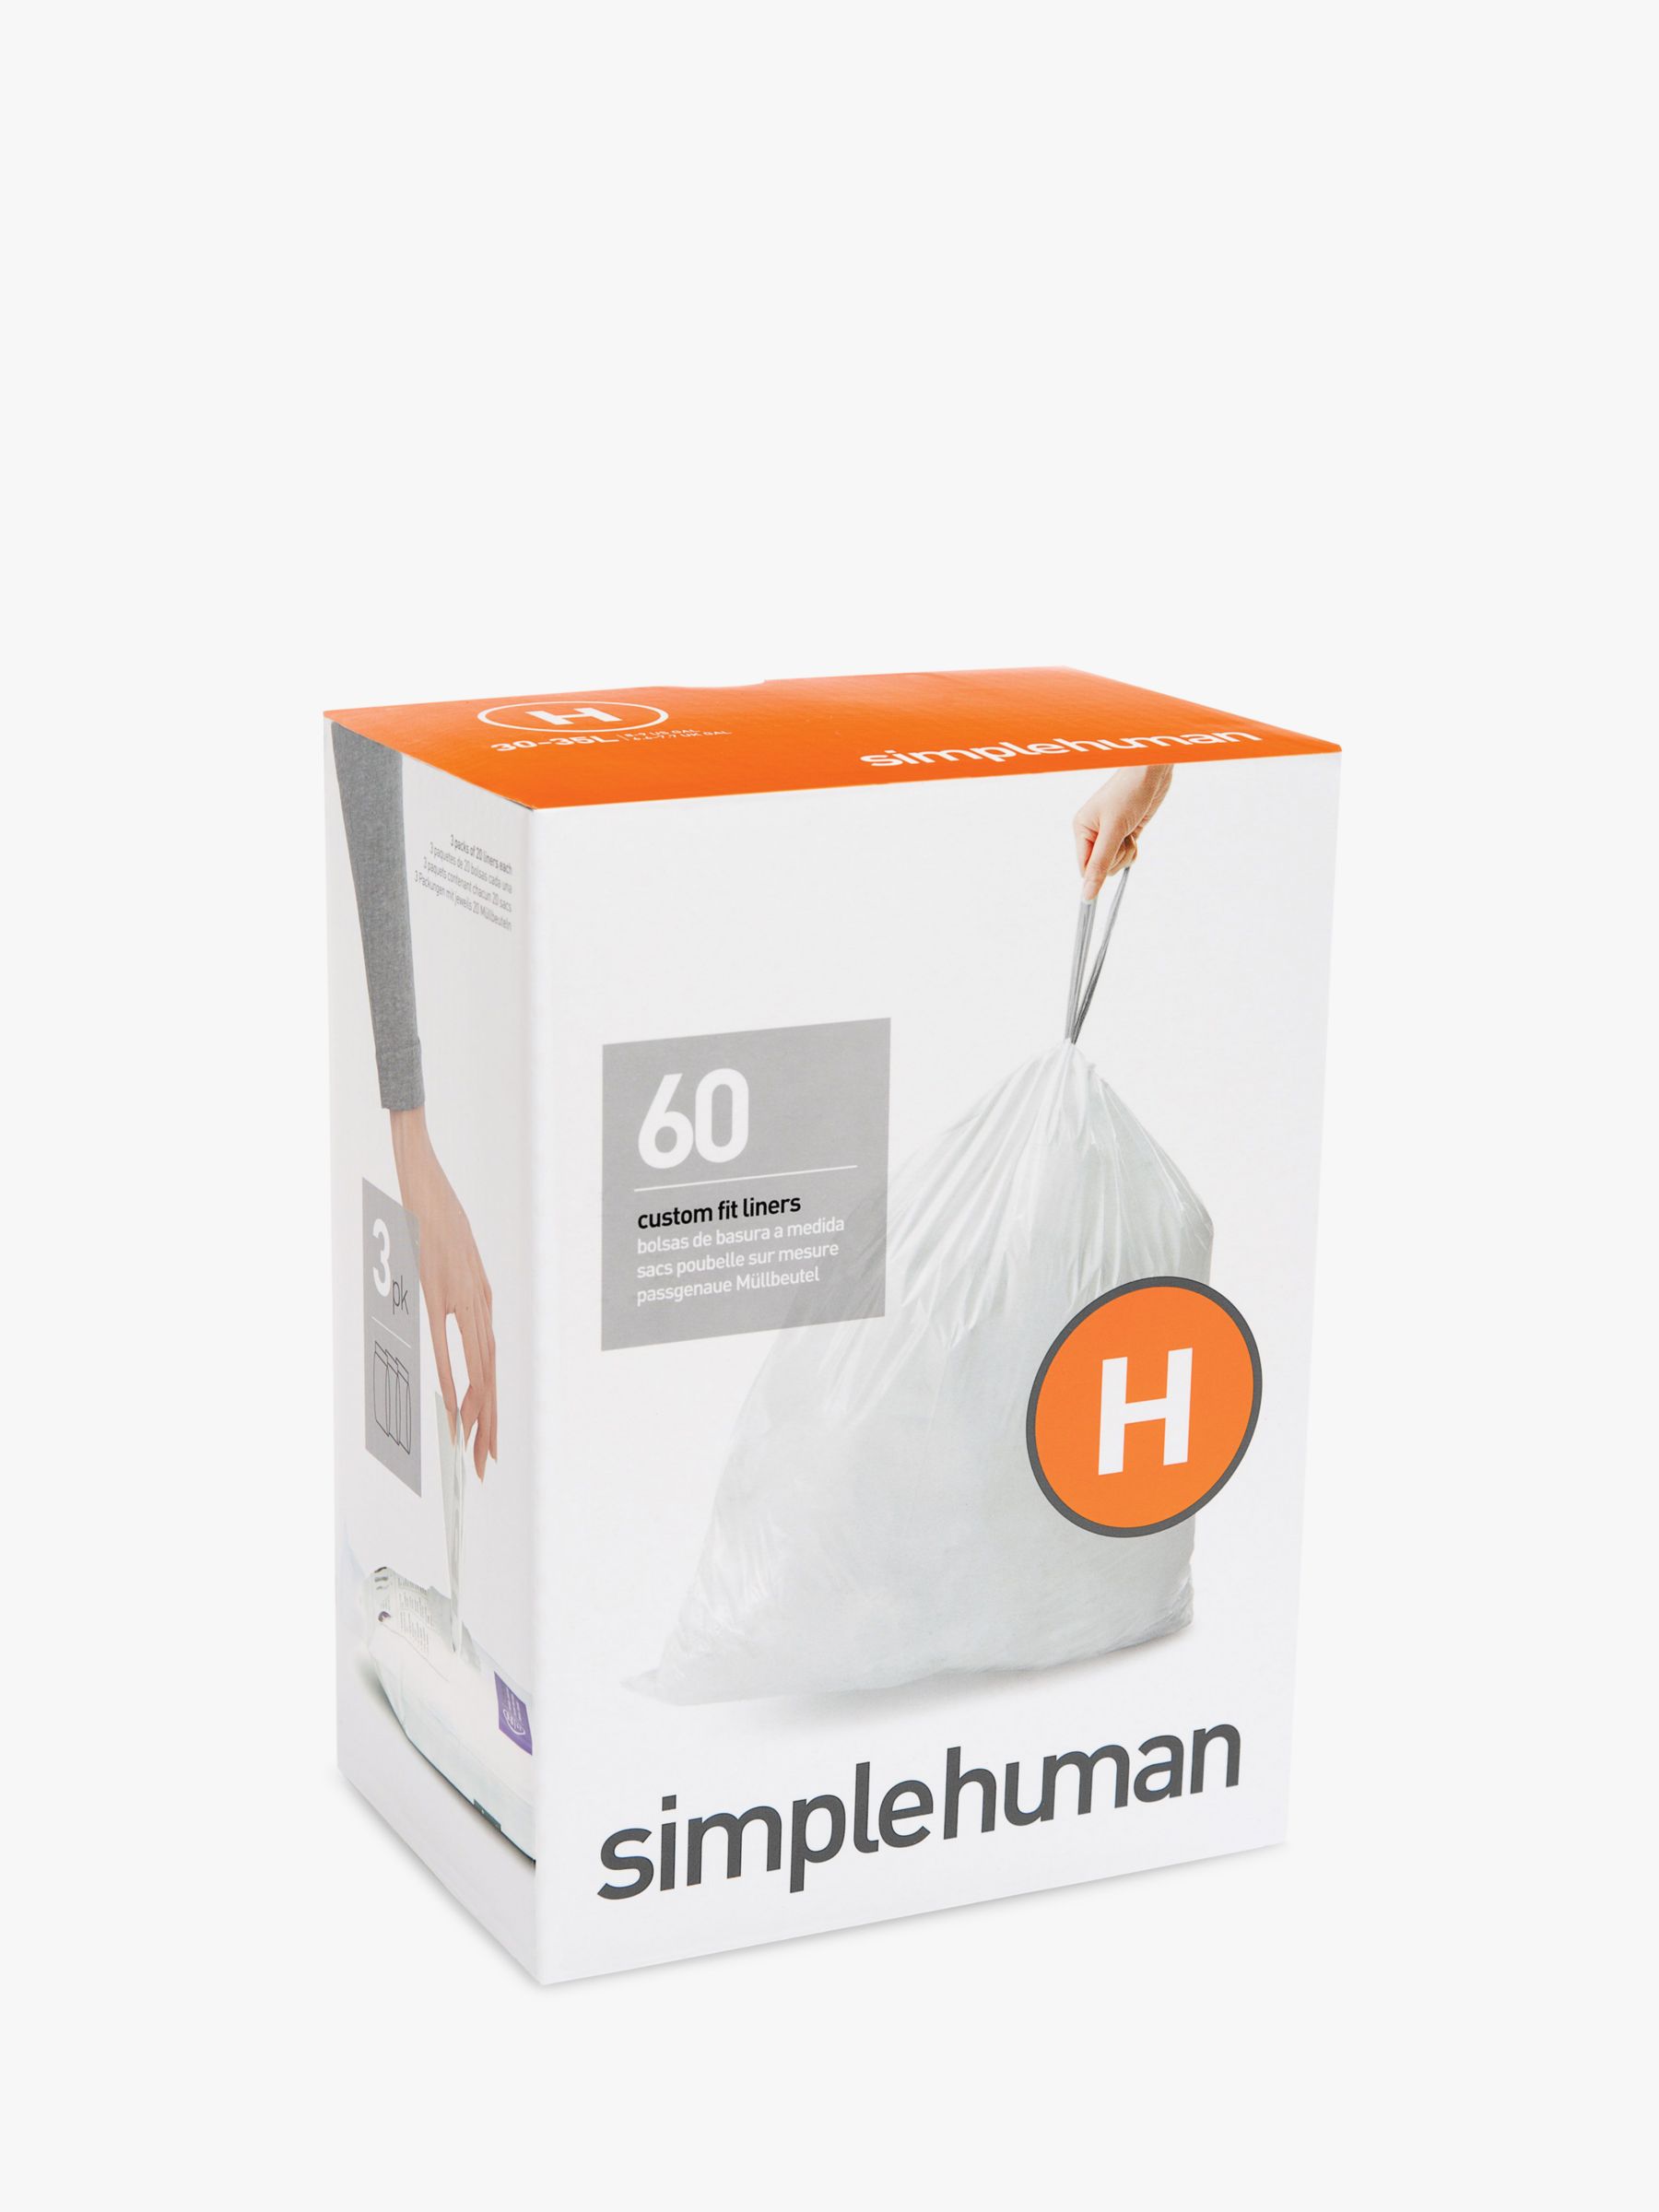 Trash bags, code P, 50-60 L / 20 pcs., plastic - simplehuman